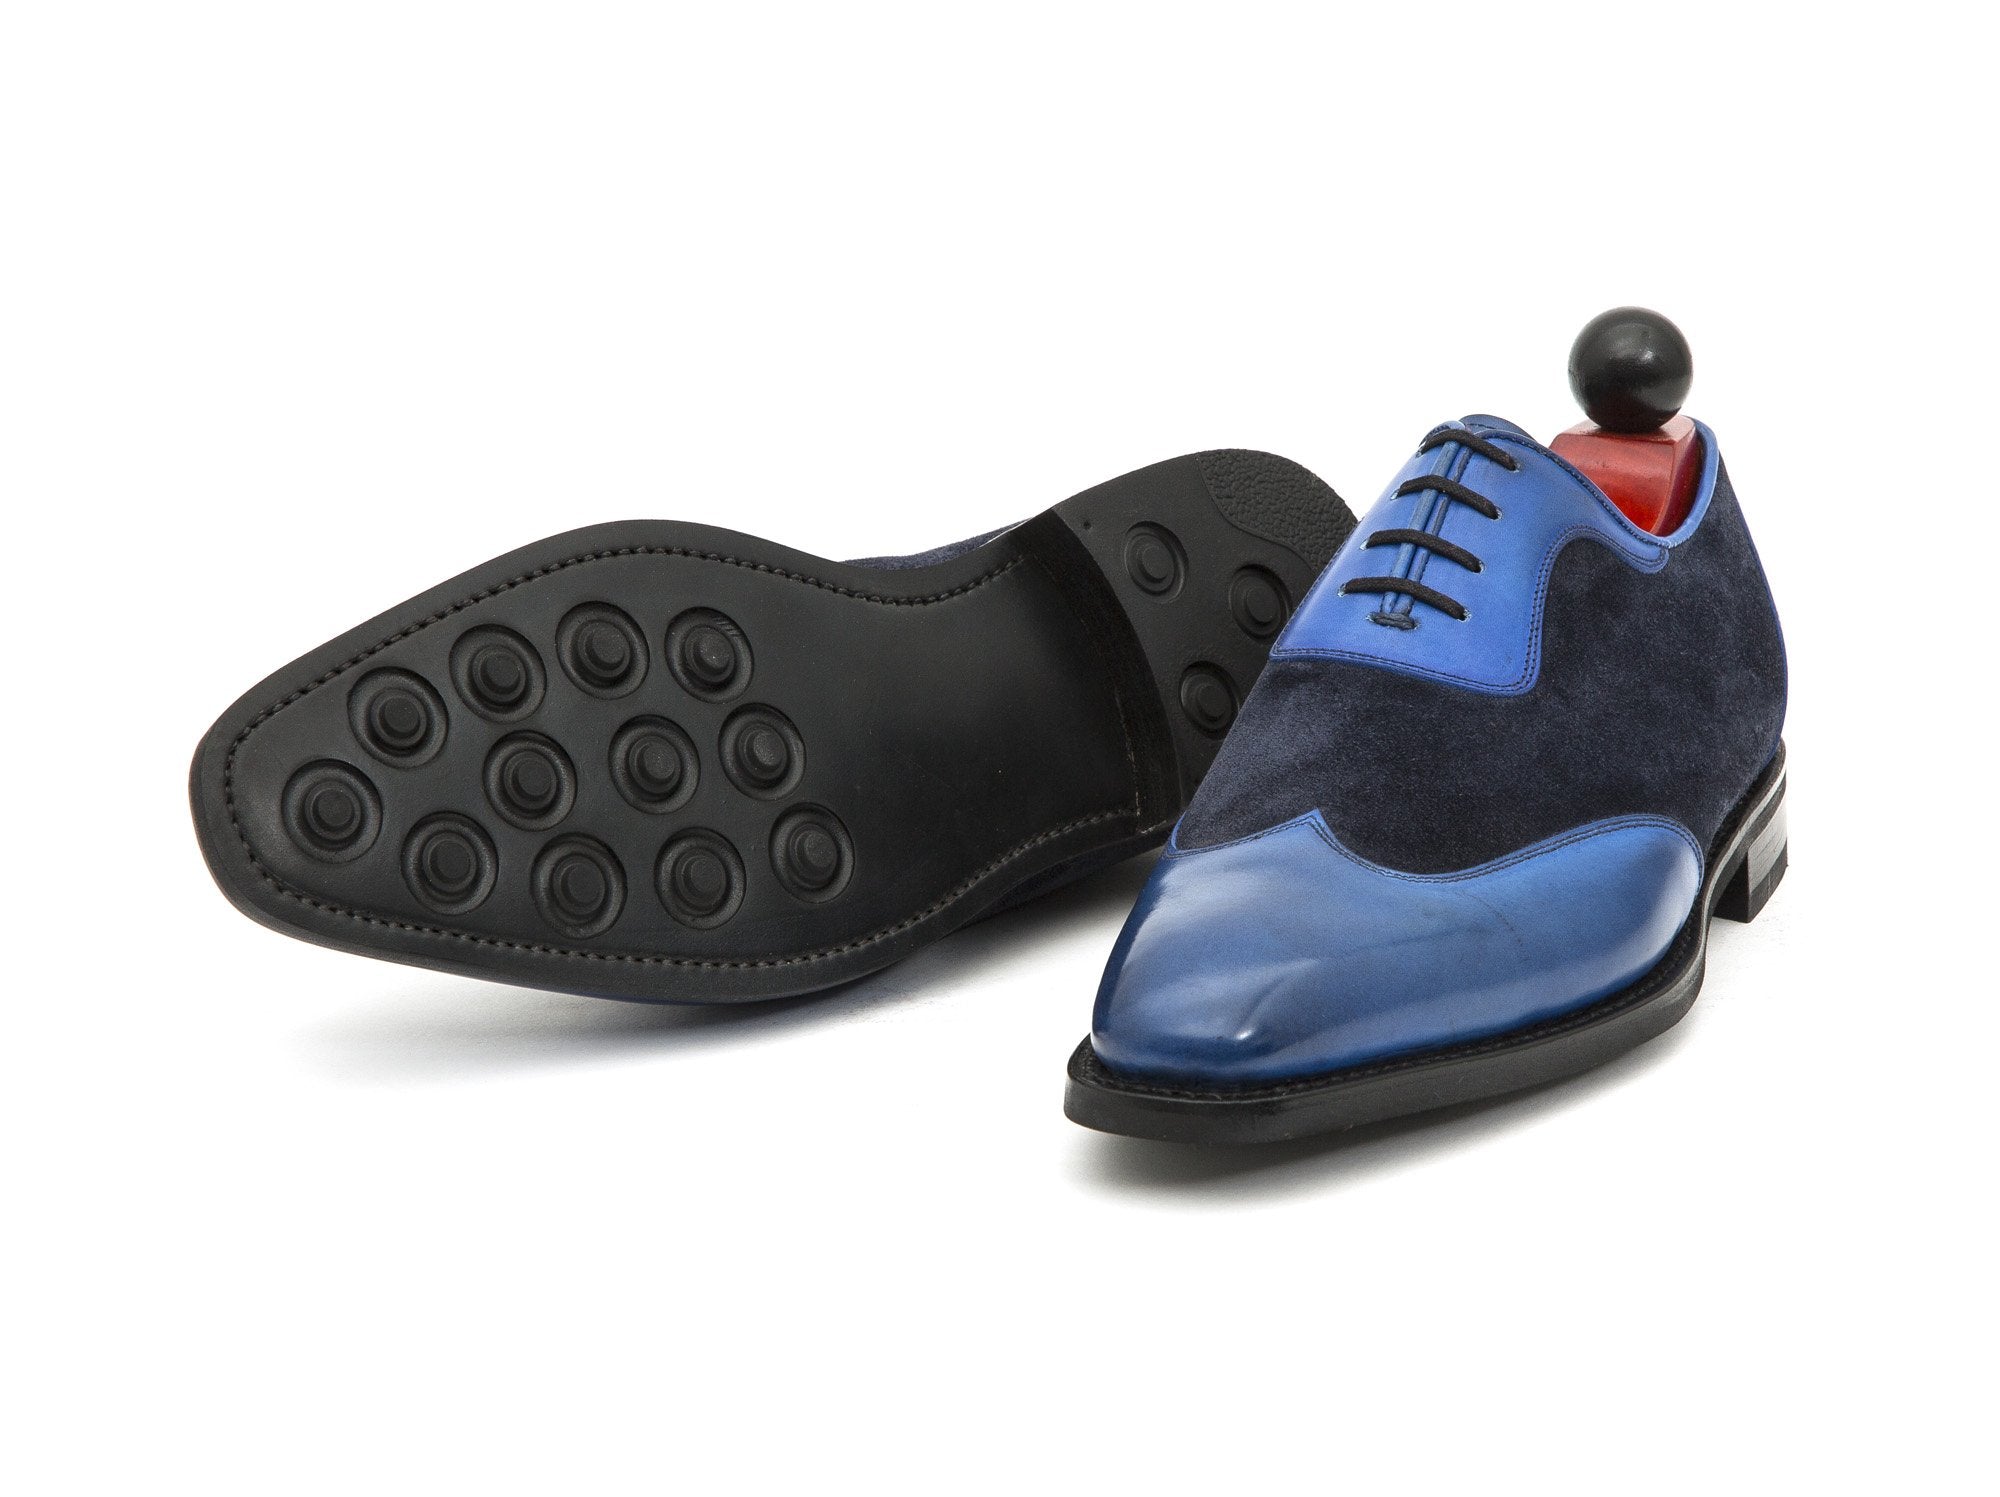 J.FitzPatrick Footwear - Rainier - Sky Blue Calf / Navy Suede - Country Rubber Sole - LPB Last